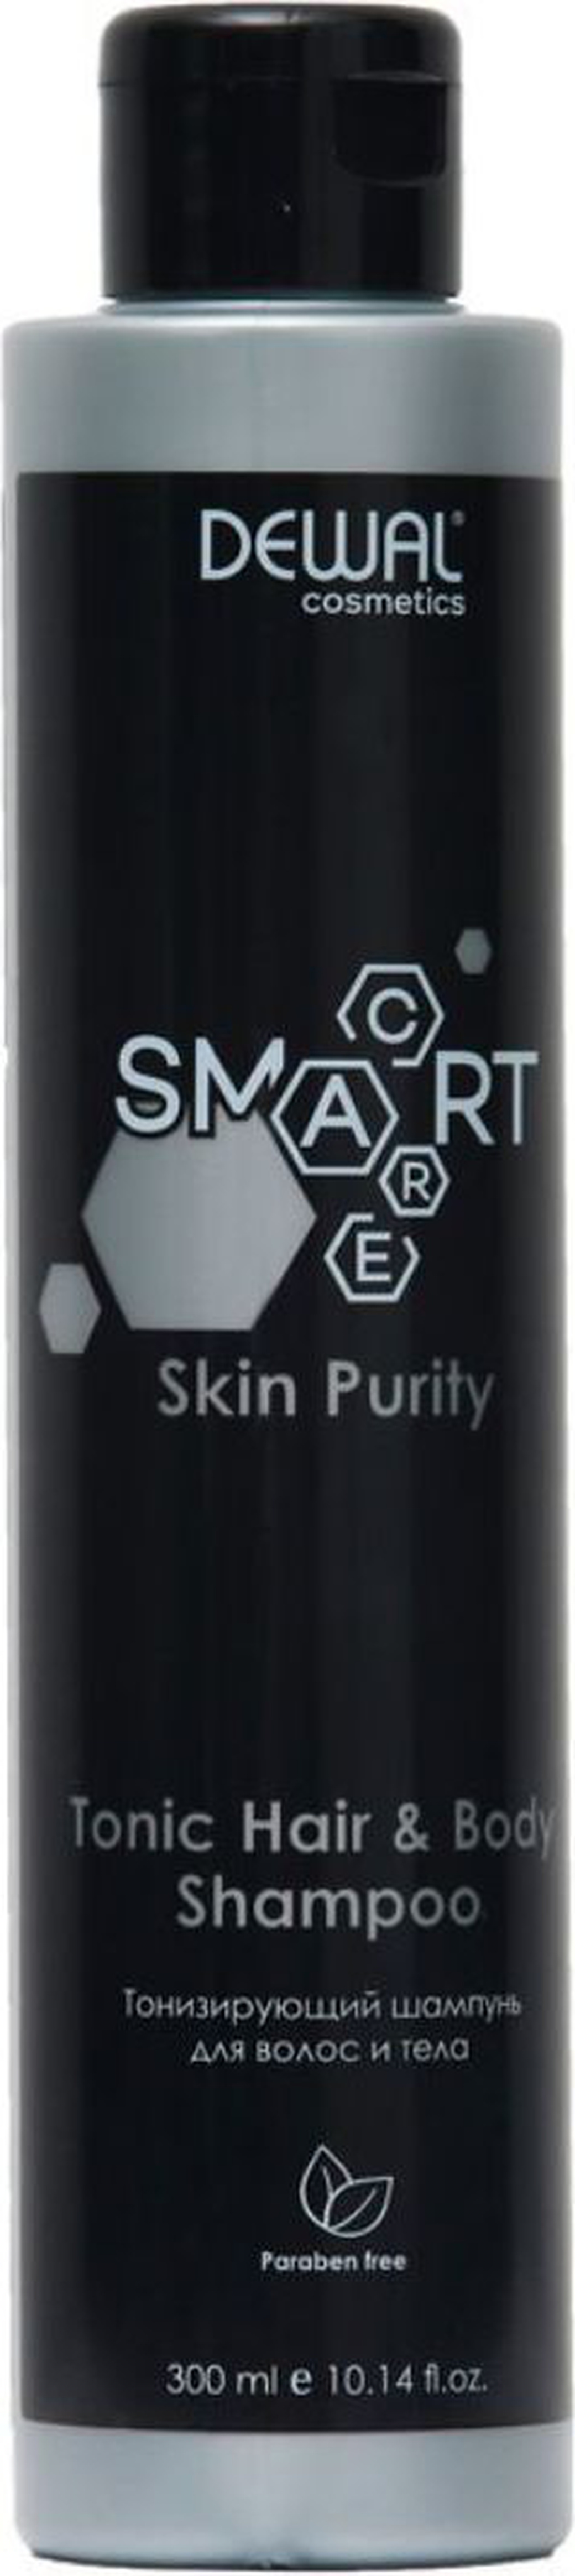 Шампунь тонизирующий для волос и тела SMART CARE Skin Purity Tonic Shampoo Hair & Body, 300 мл фото